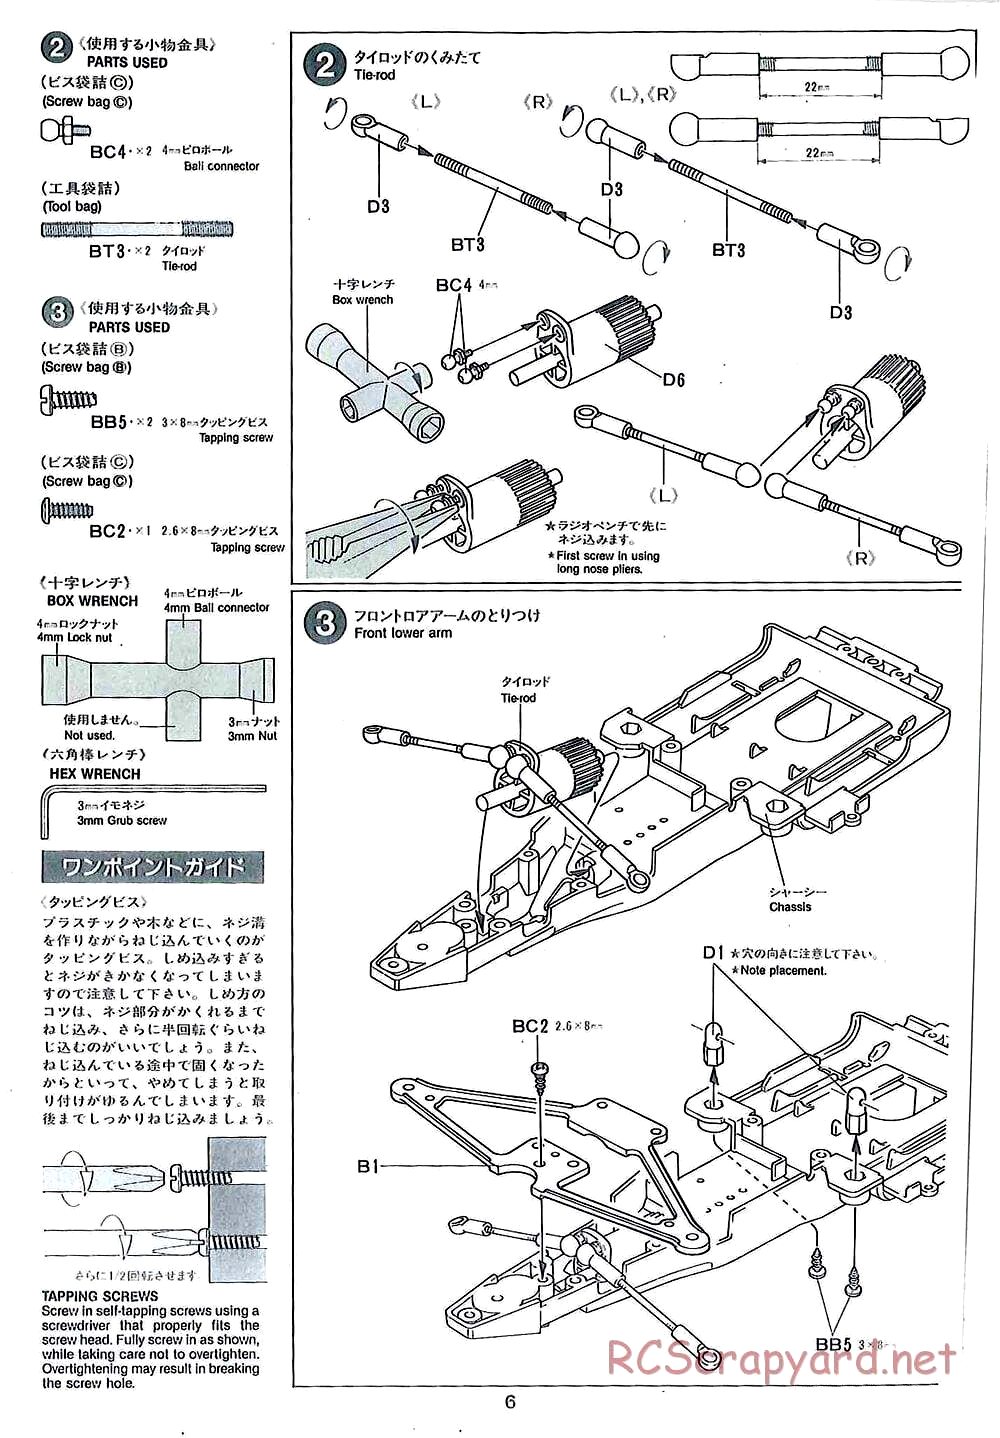 Tamiya - TamTech - F1 Chassis - Manual - Page 6